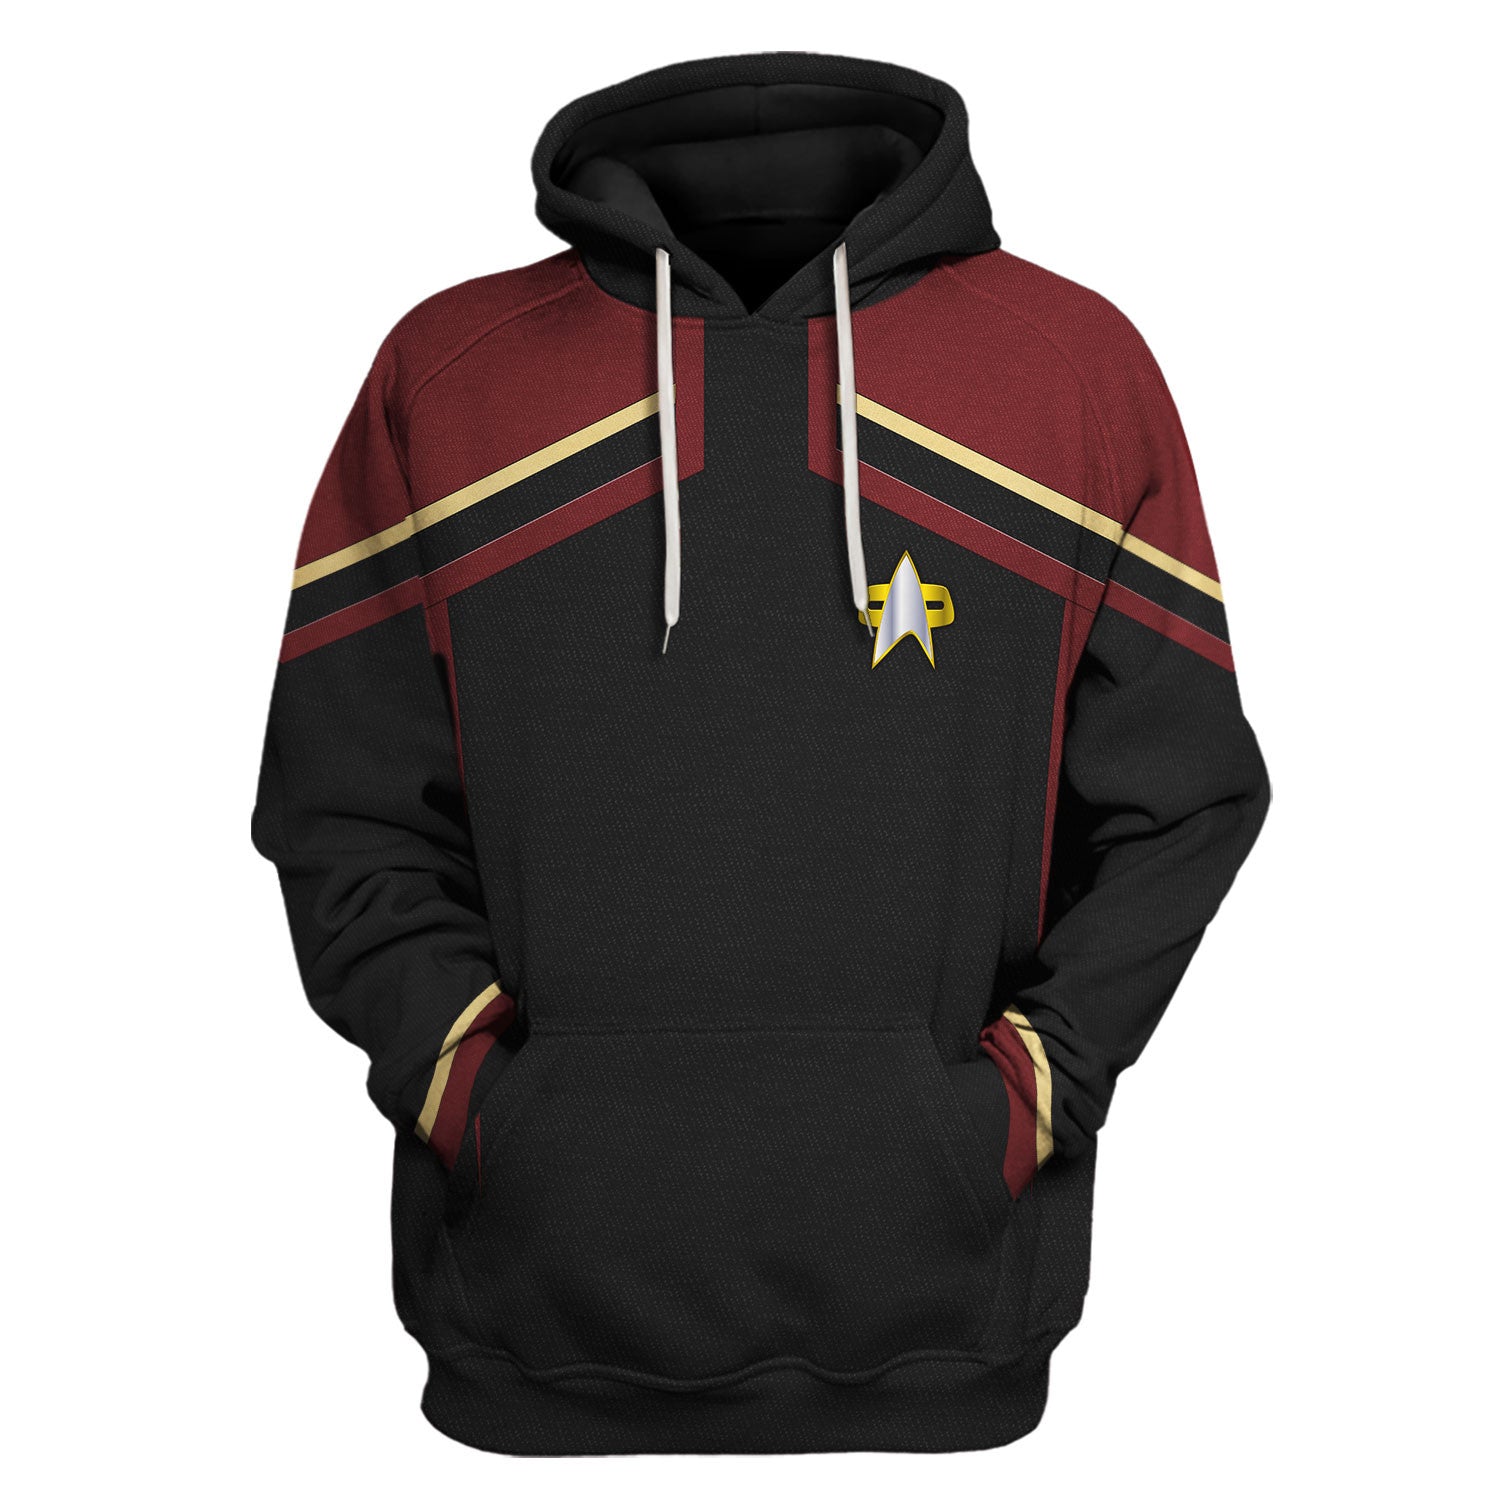 Starfleet Uniform hooodie